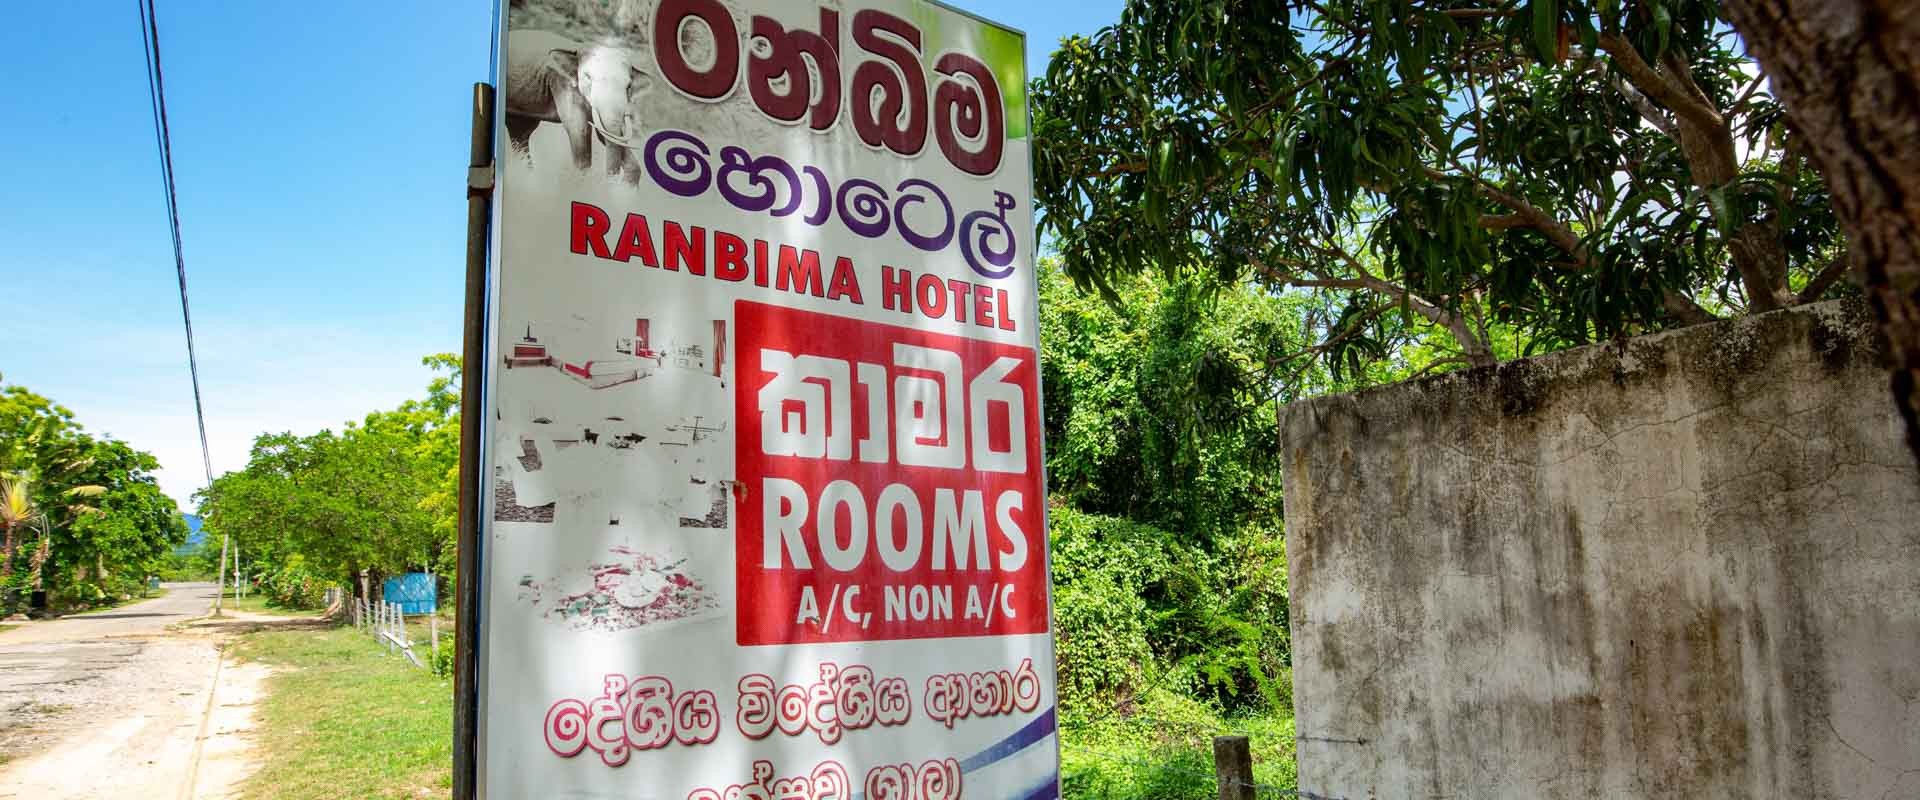 Ranbima Hotel - Gateway to East